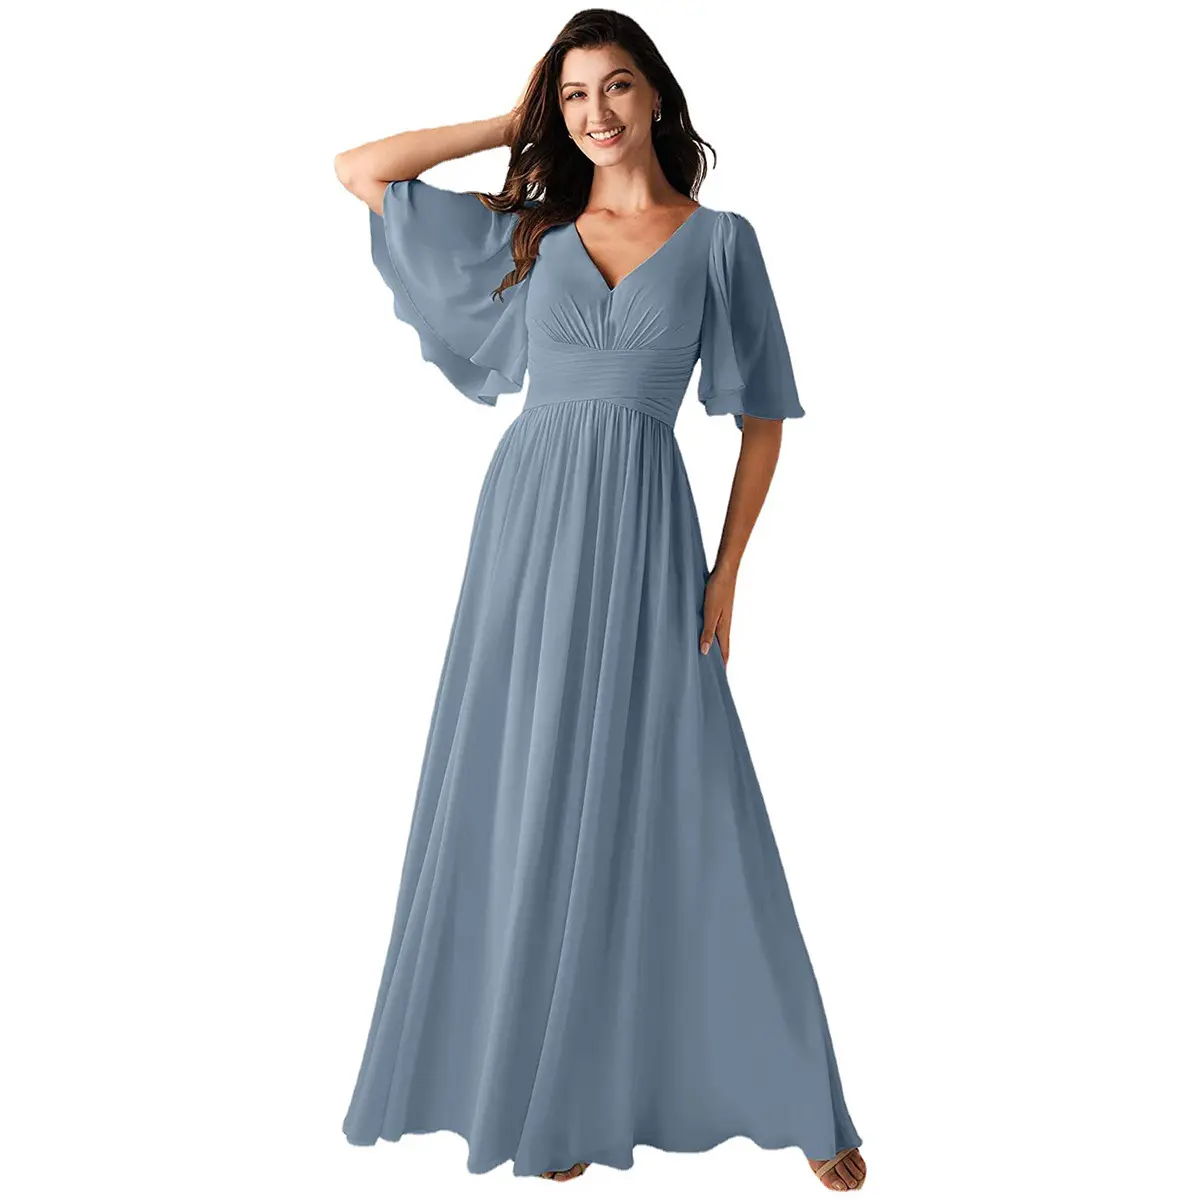 2023 Ebay Apparel Design Services Latest High Royal Blue Evening Gown Grade Chiffon V-neck Bridesmaids Prom dresses skyblue